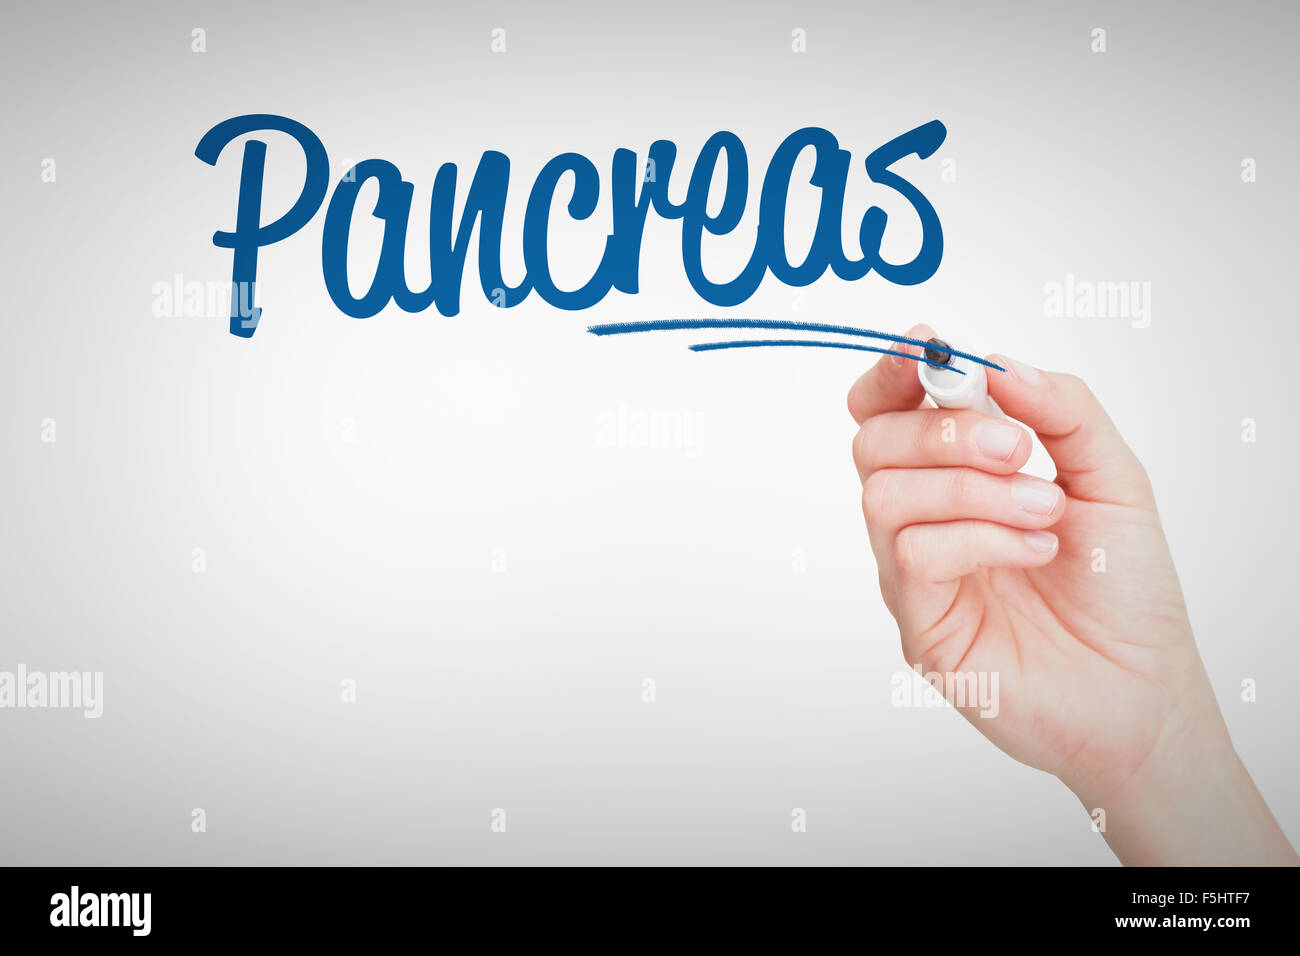 Pancreas against female hand holding black whiteboard marker Stock Photo